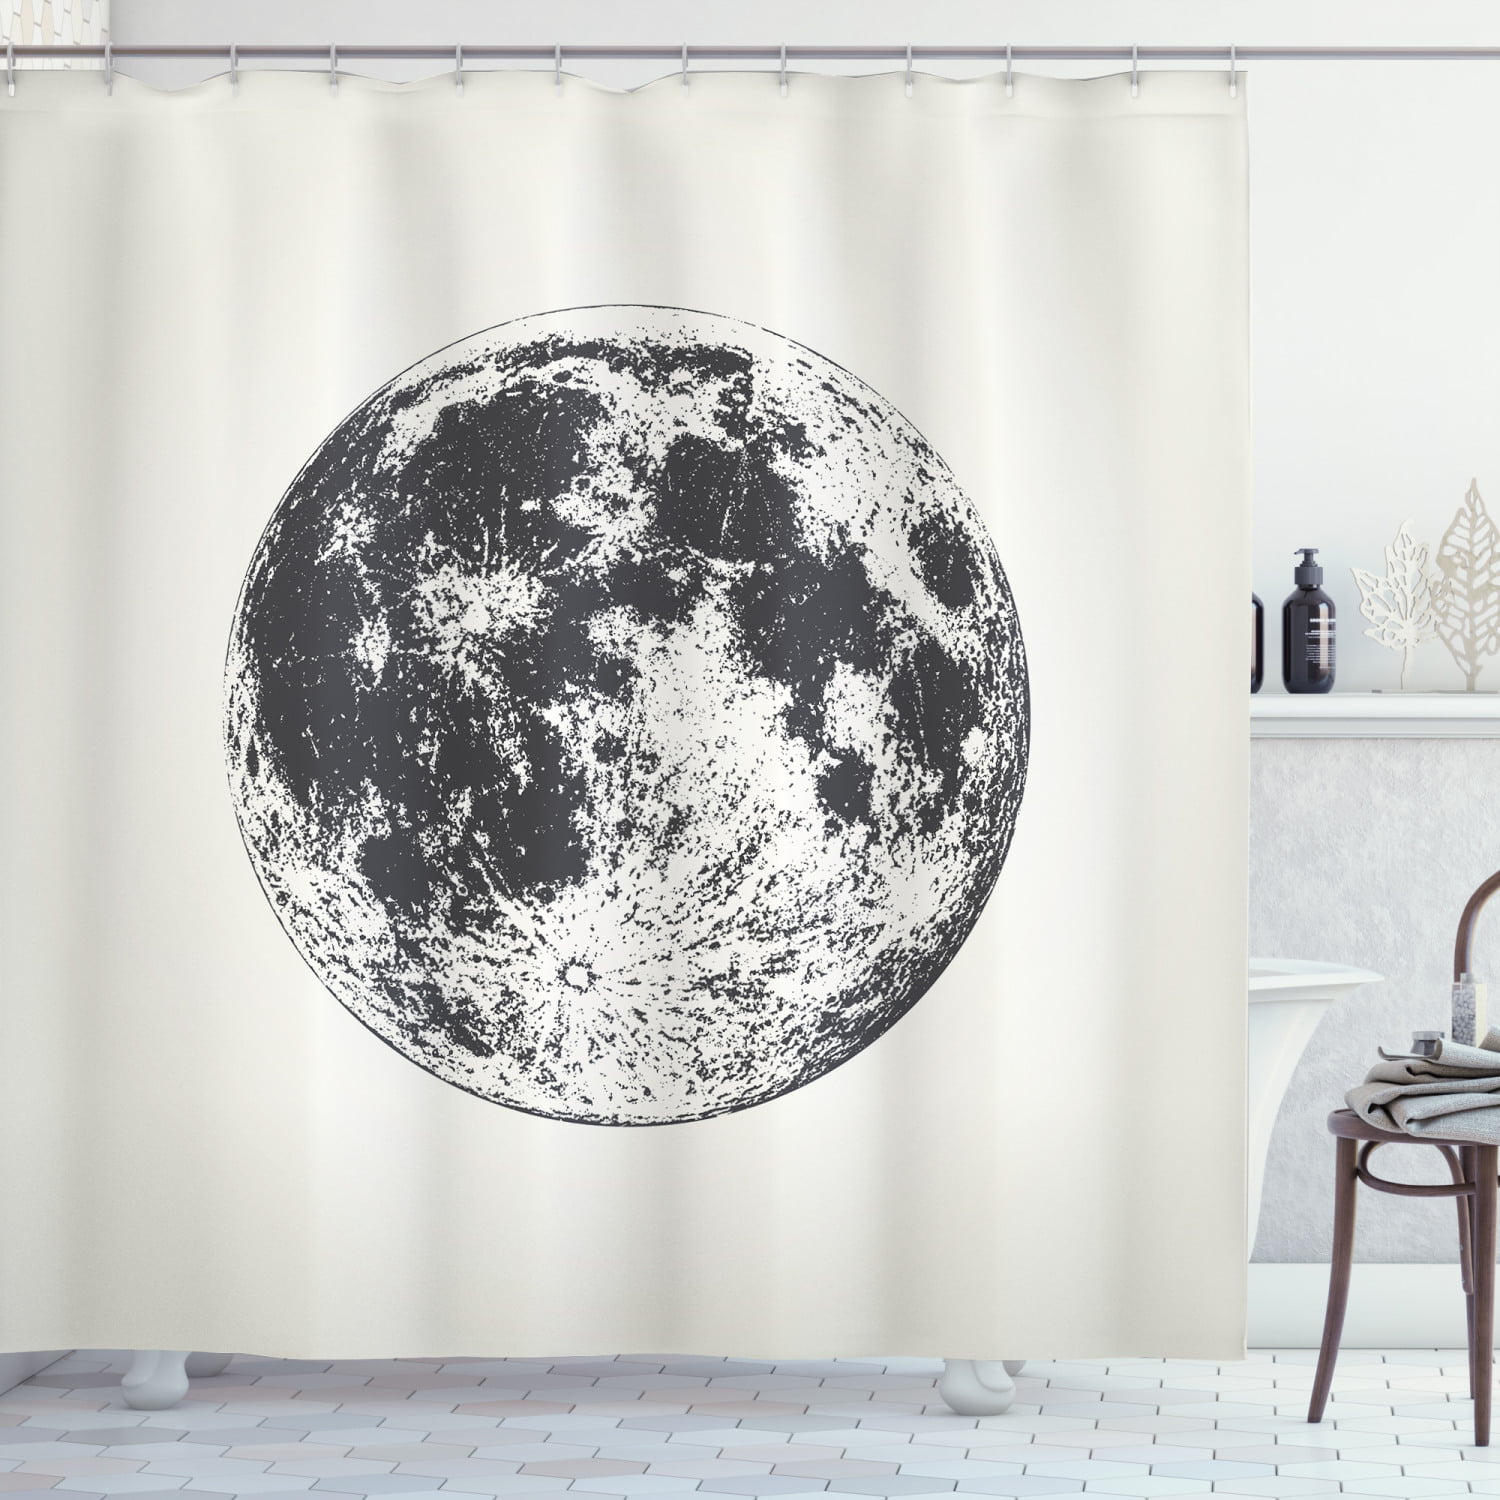 Full Moon Shower Curtain High Detailed, Full Circle Shower Curtain